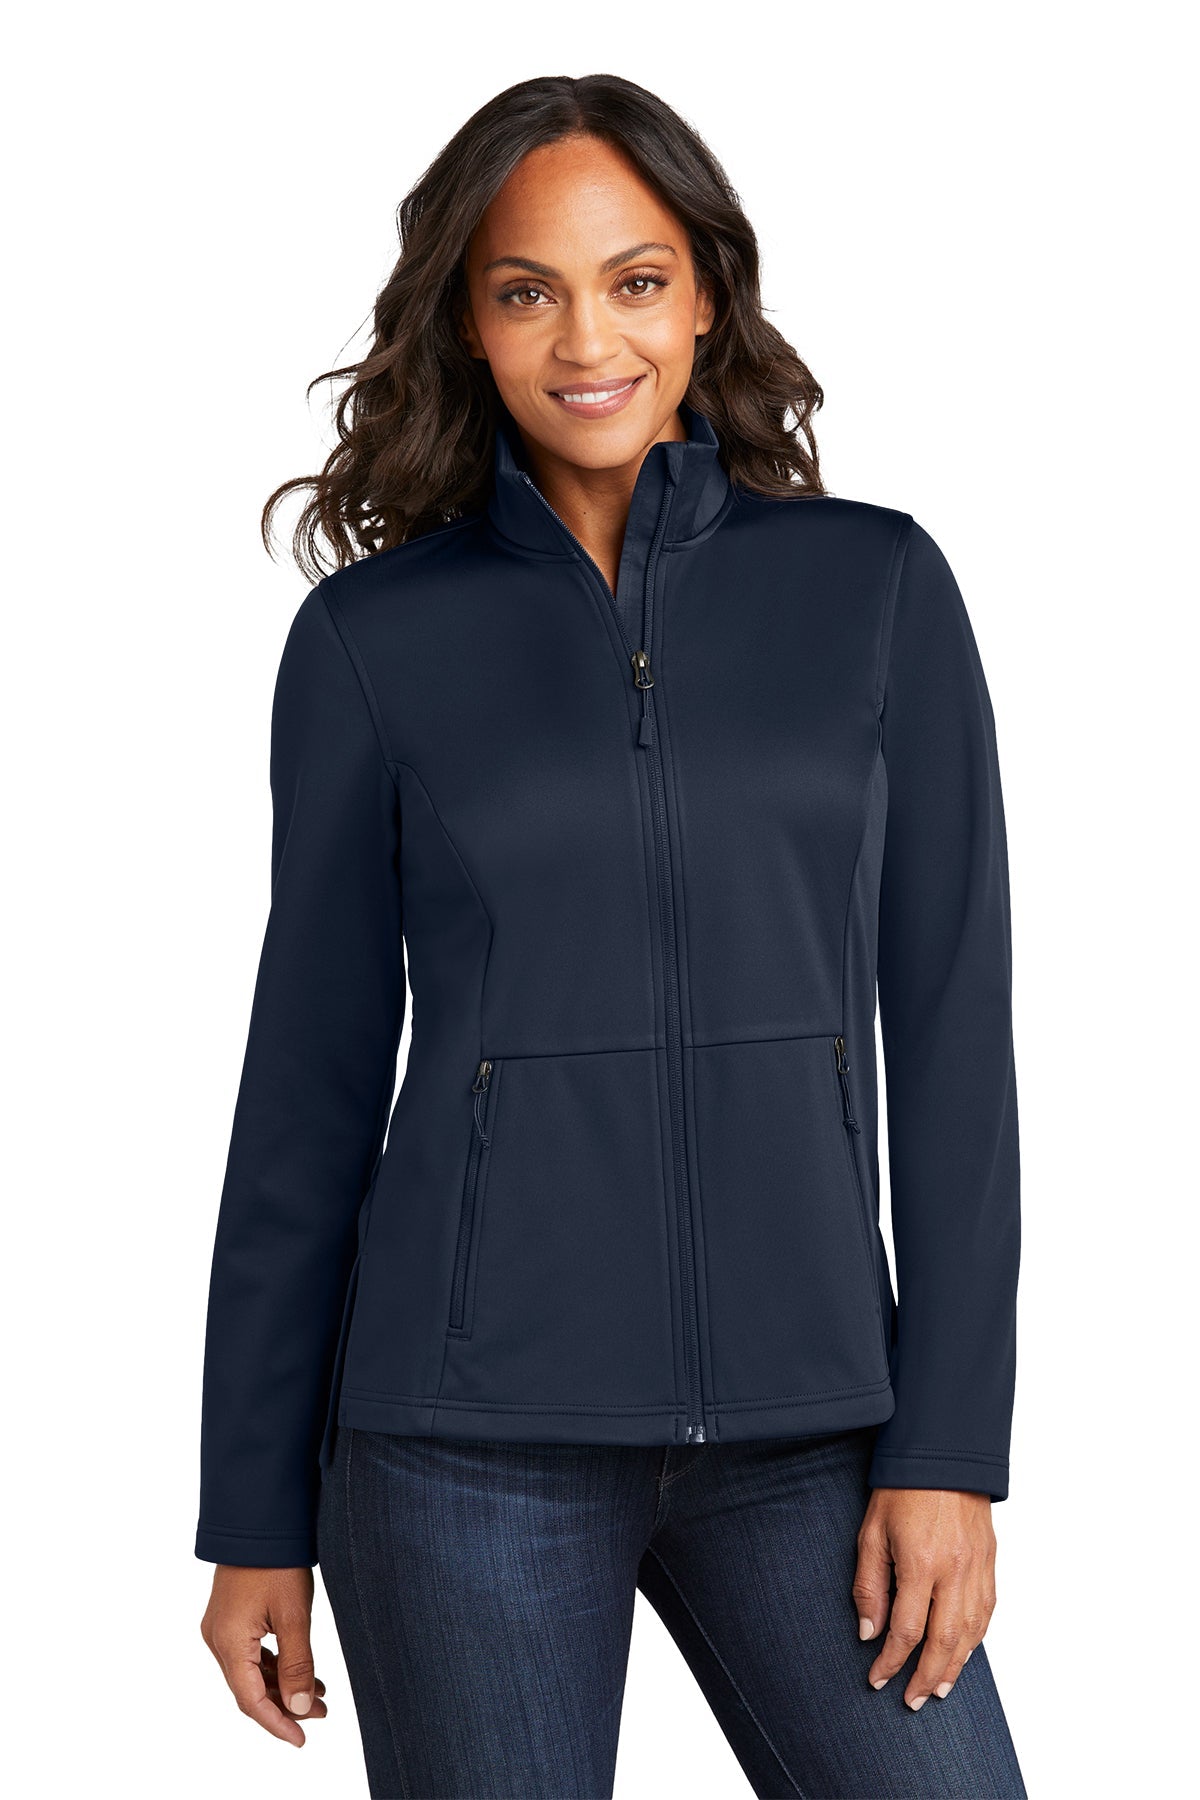 L617 Port Authority® Ladies Flexshell Jacket